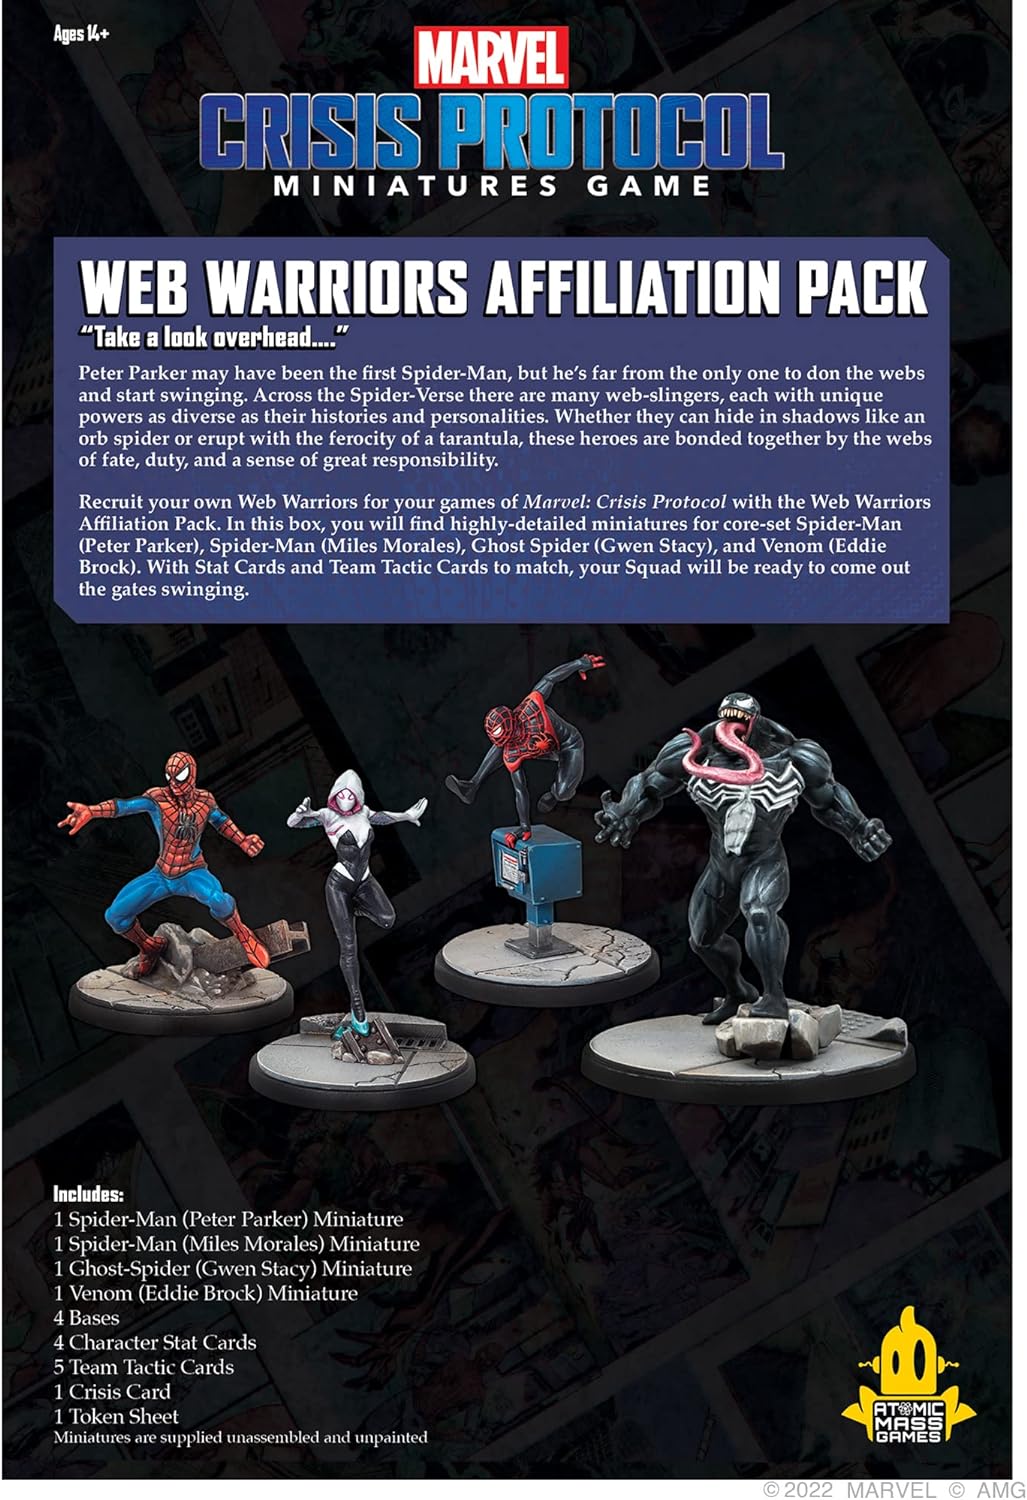 Atomic Mass Games | Web Warriors Affiliation Pack: Marvel Crisis Protocol | Miniatures Game